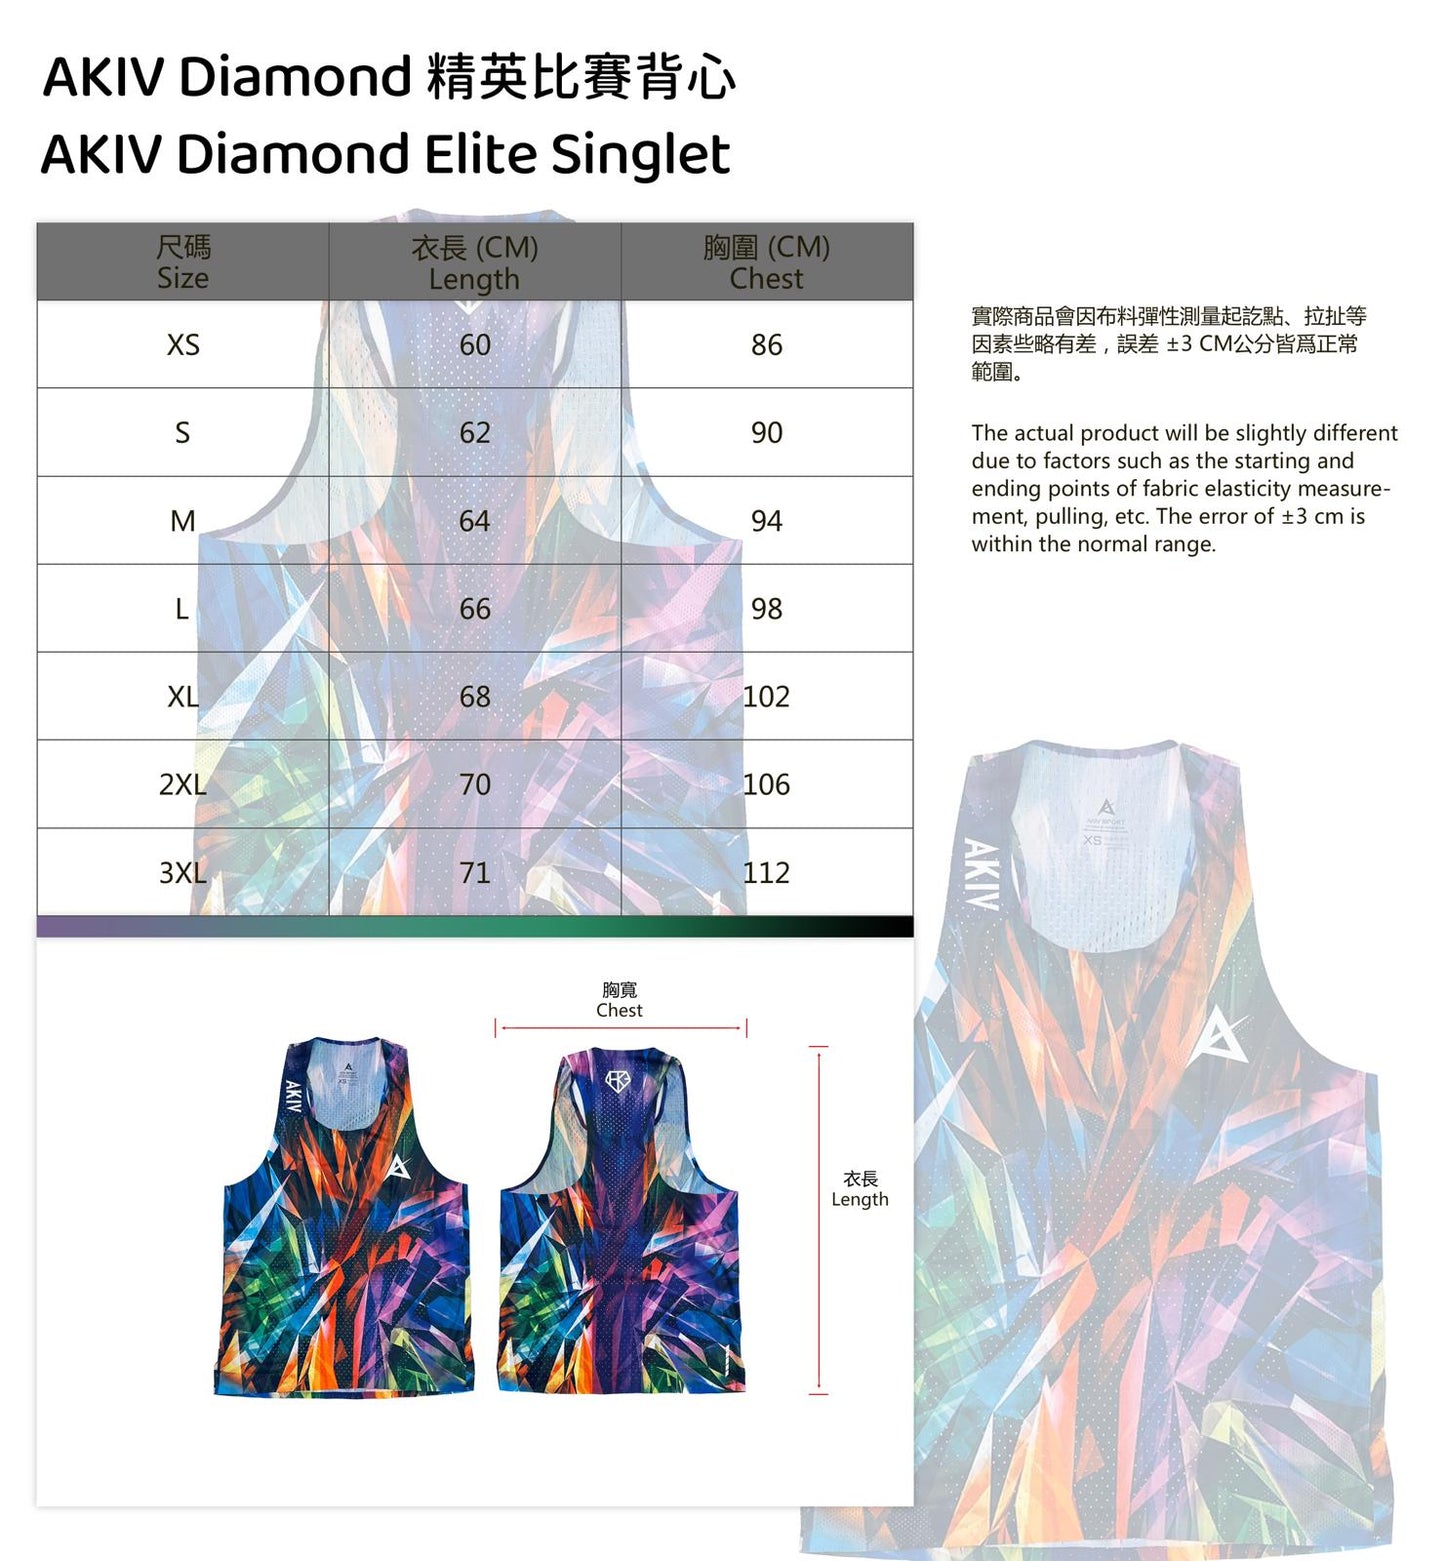 AKIV Diamond Elite Singlet